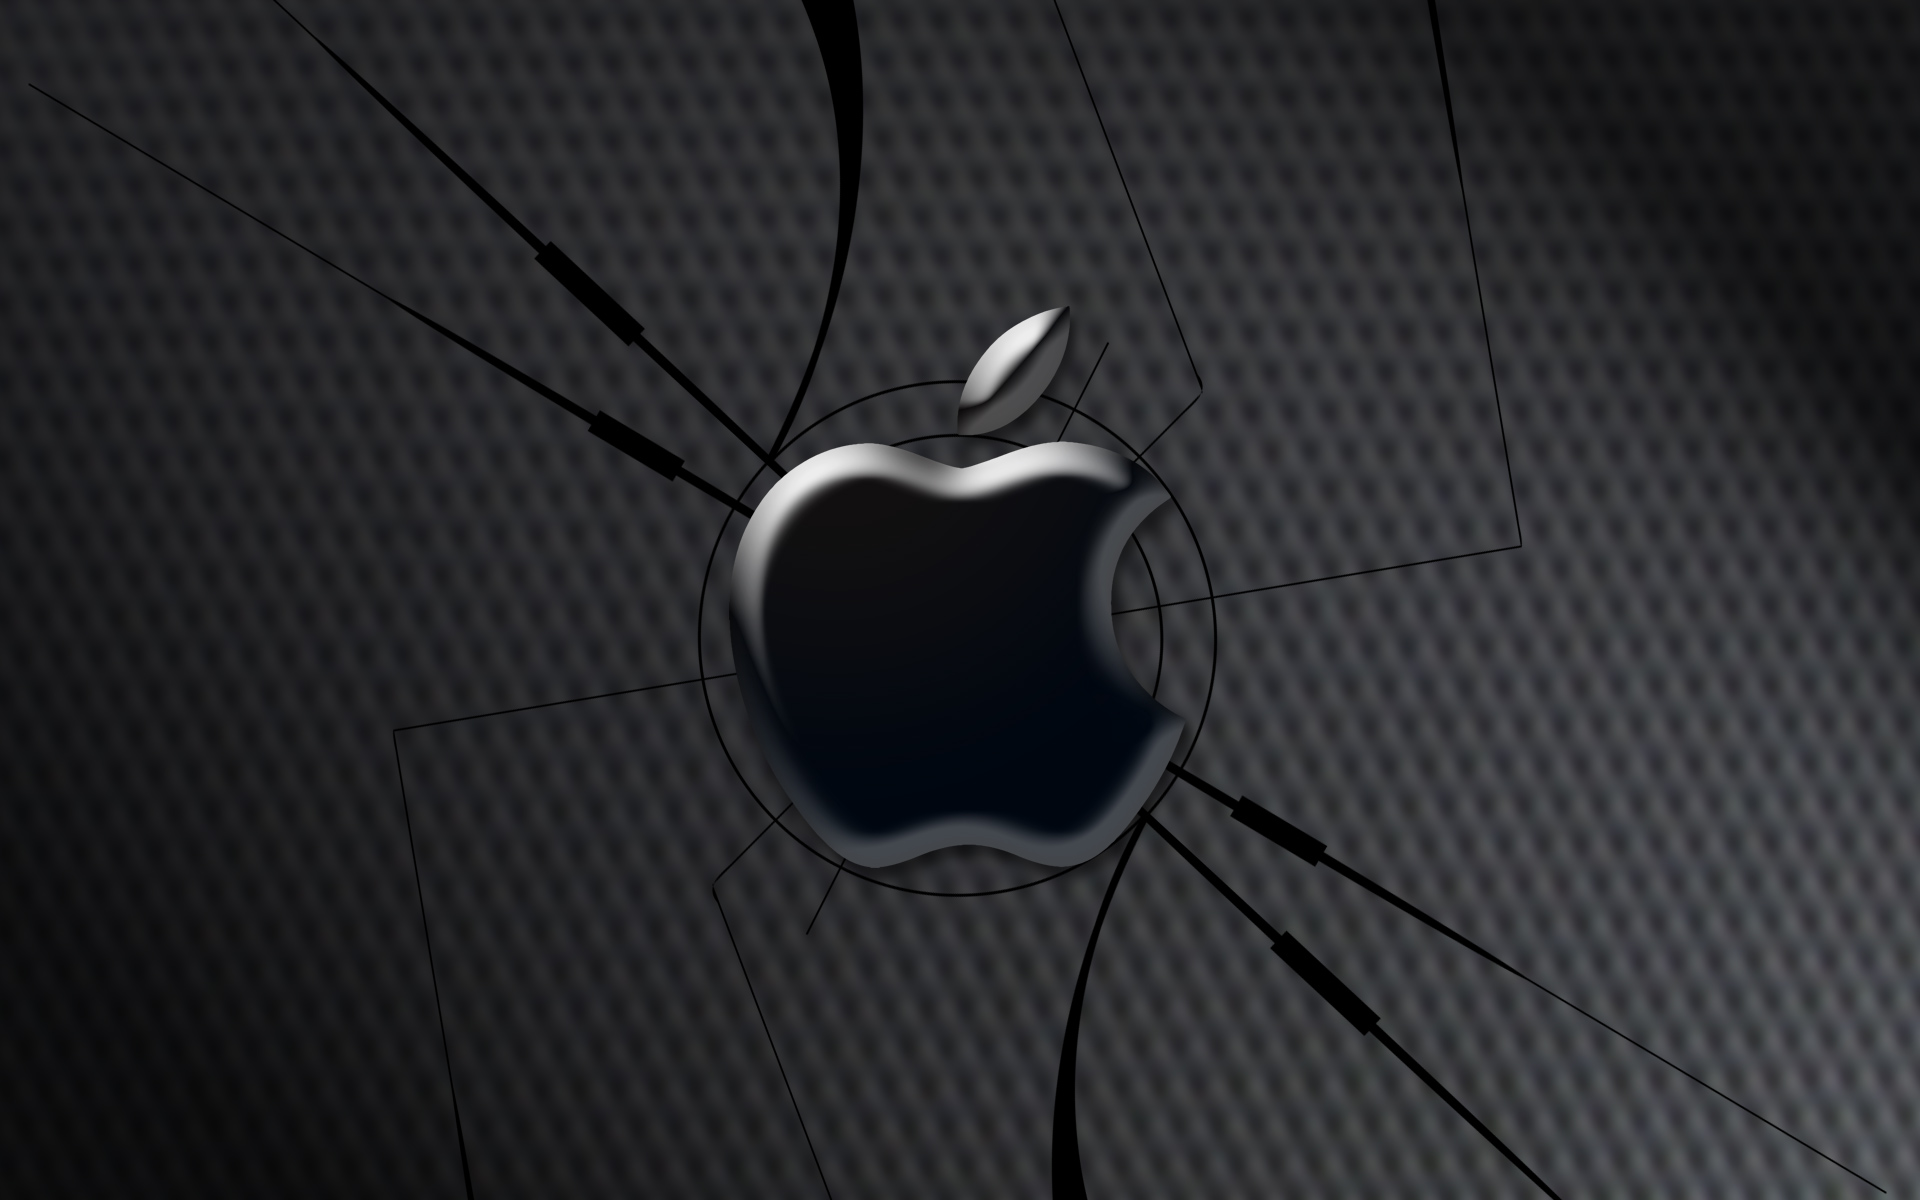 Apple Logo Wallpapers HD black cracked